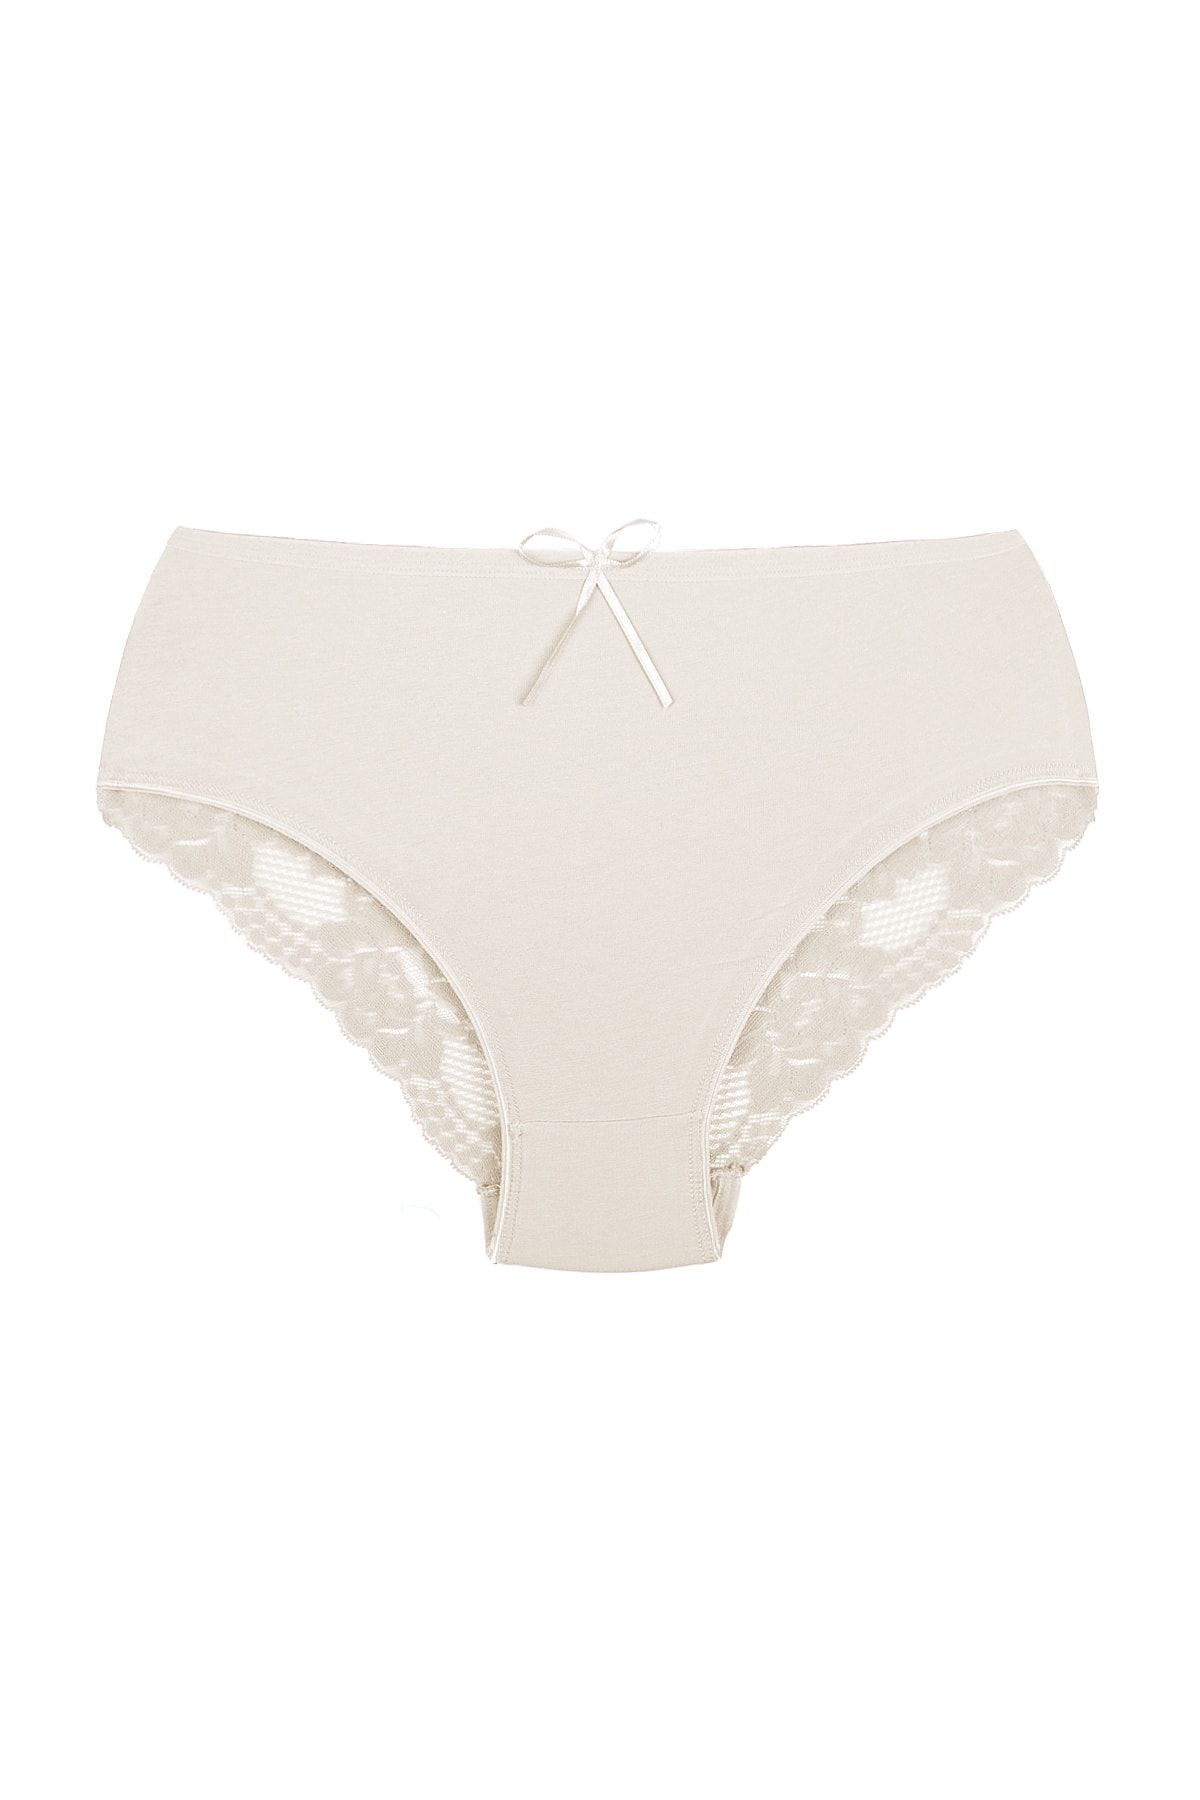 Zena Ecru Cotton Plus Size Women's Panties with Lace Detail on the Back -  Trendyol